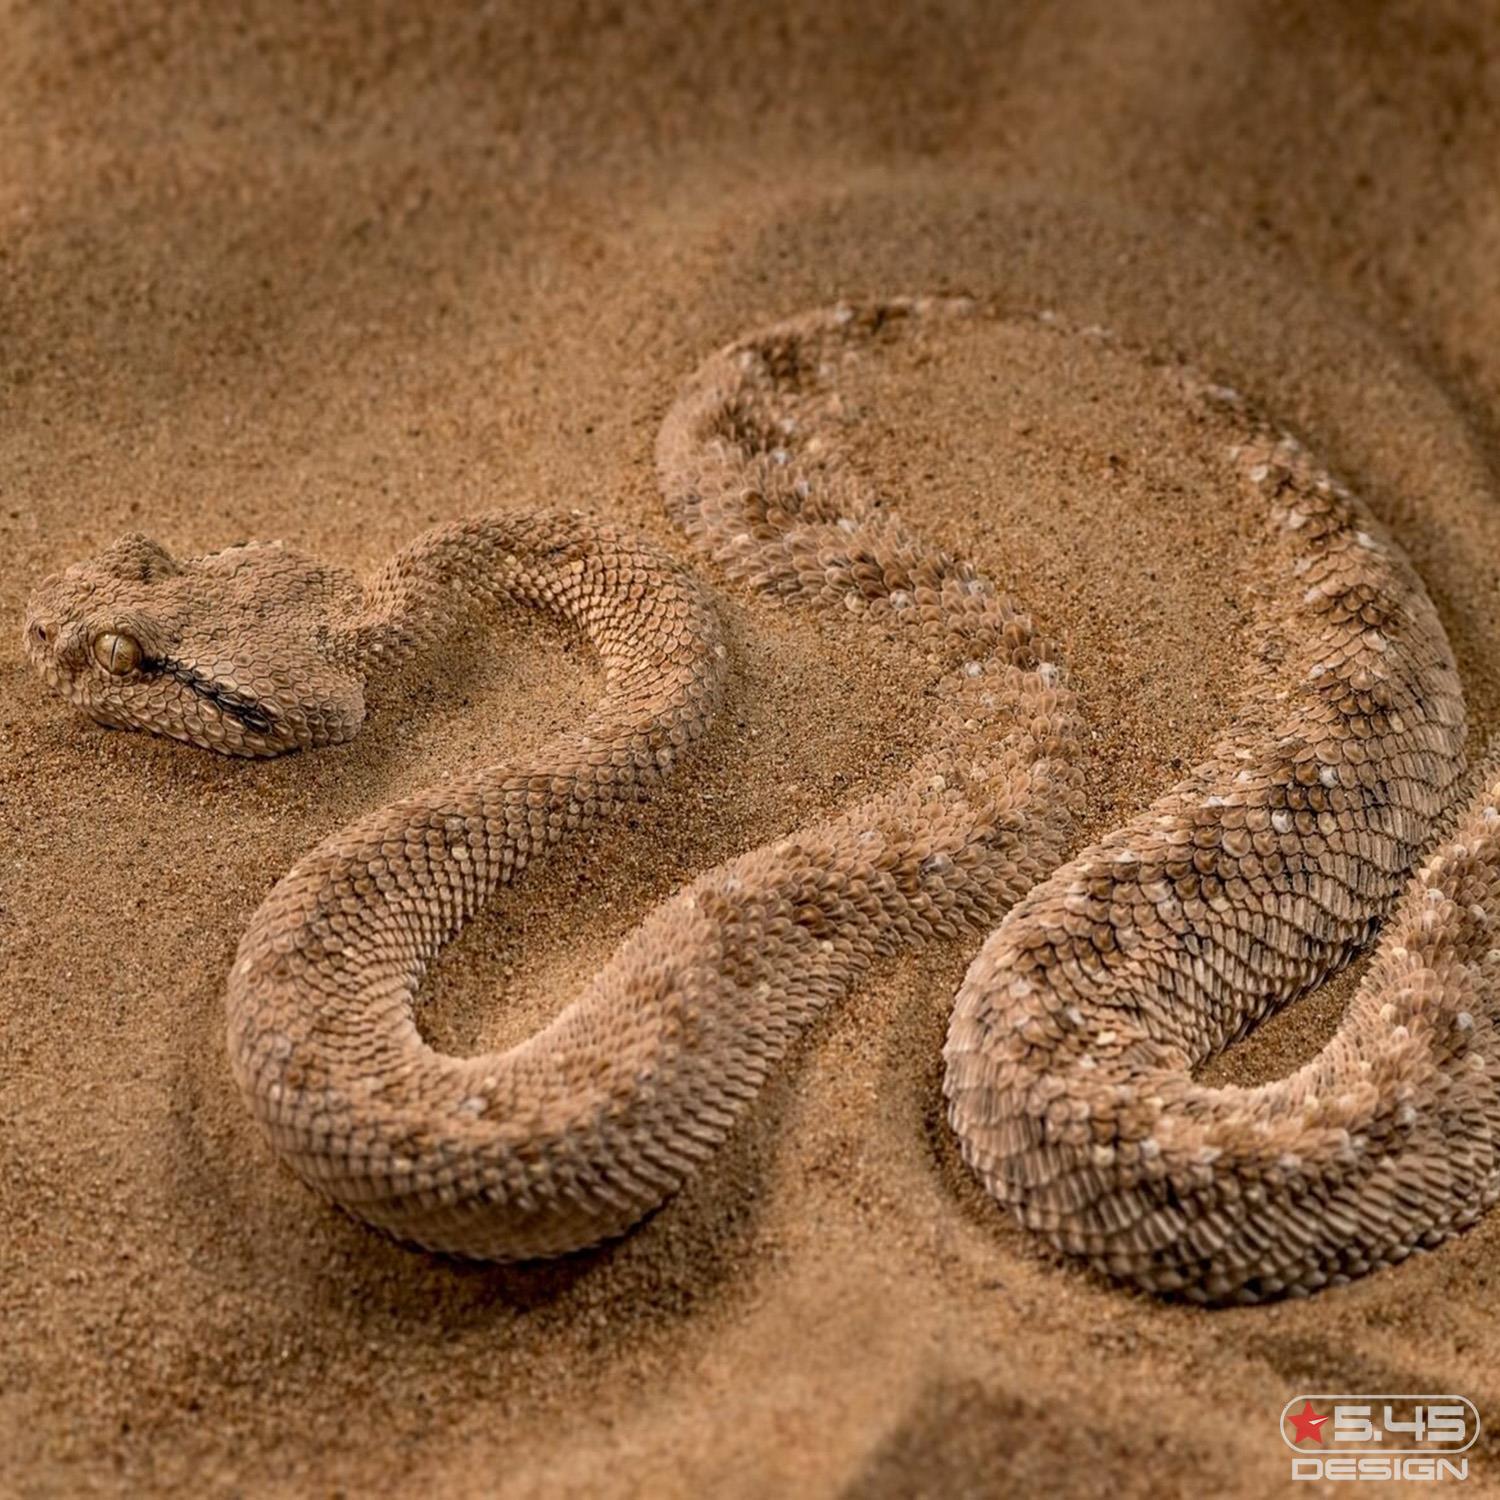 Змеи повторяют оттенки песка